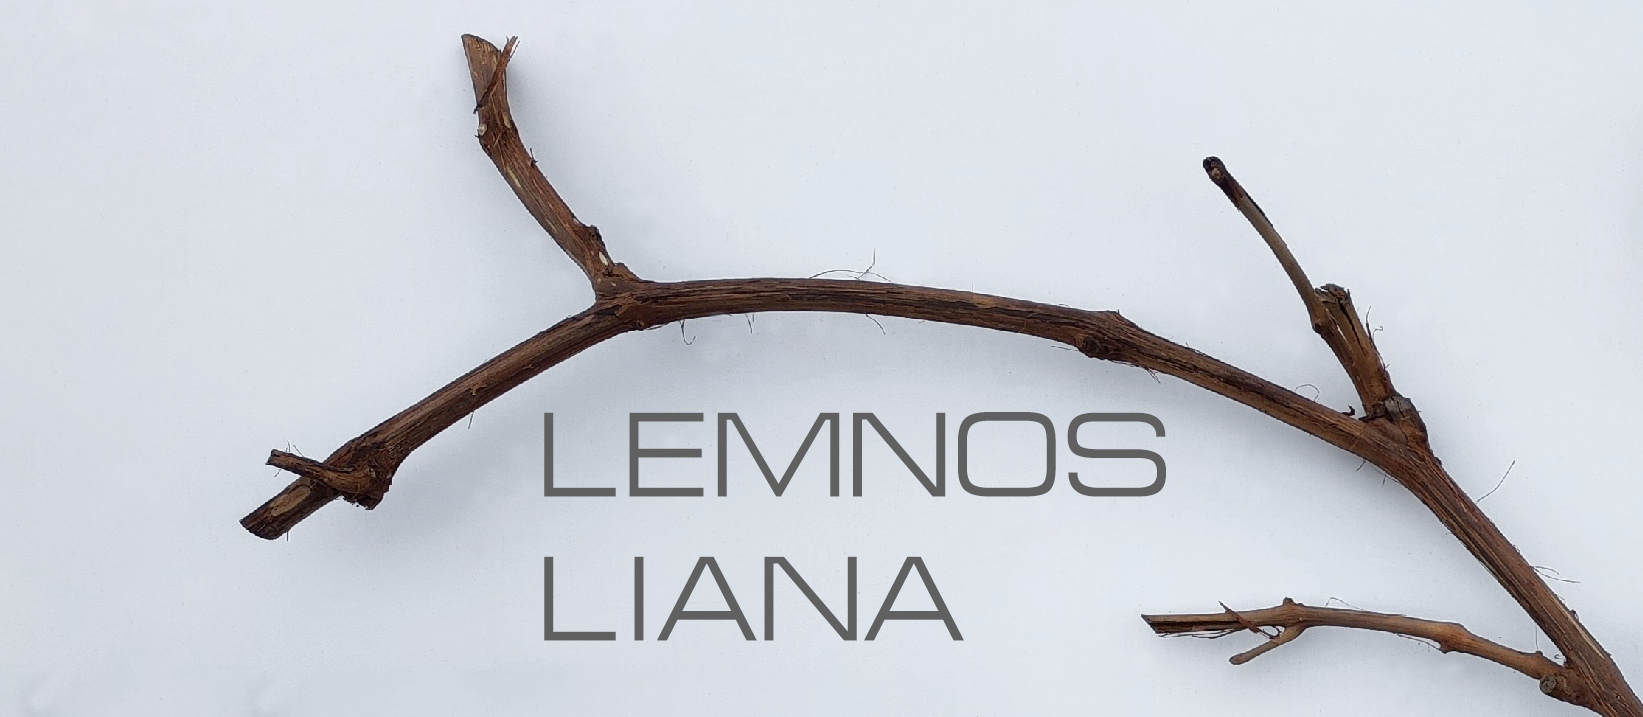 Lemnos liana